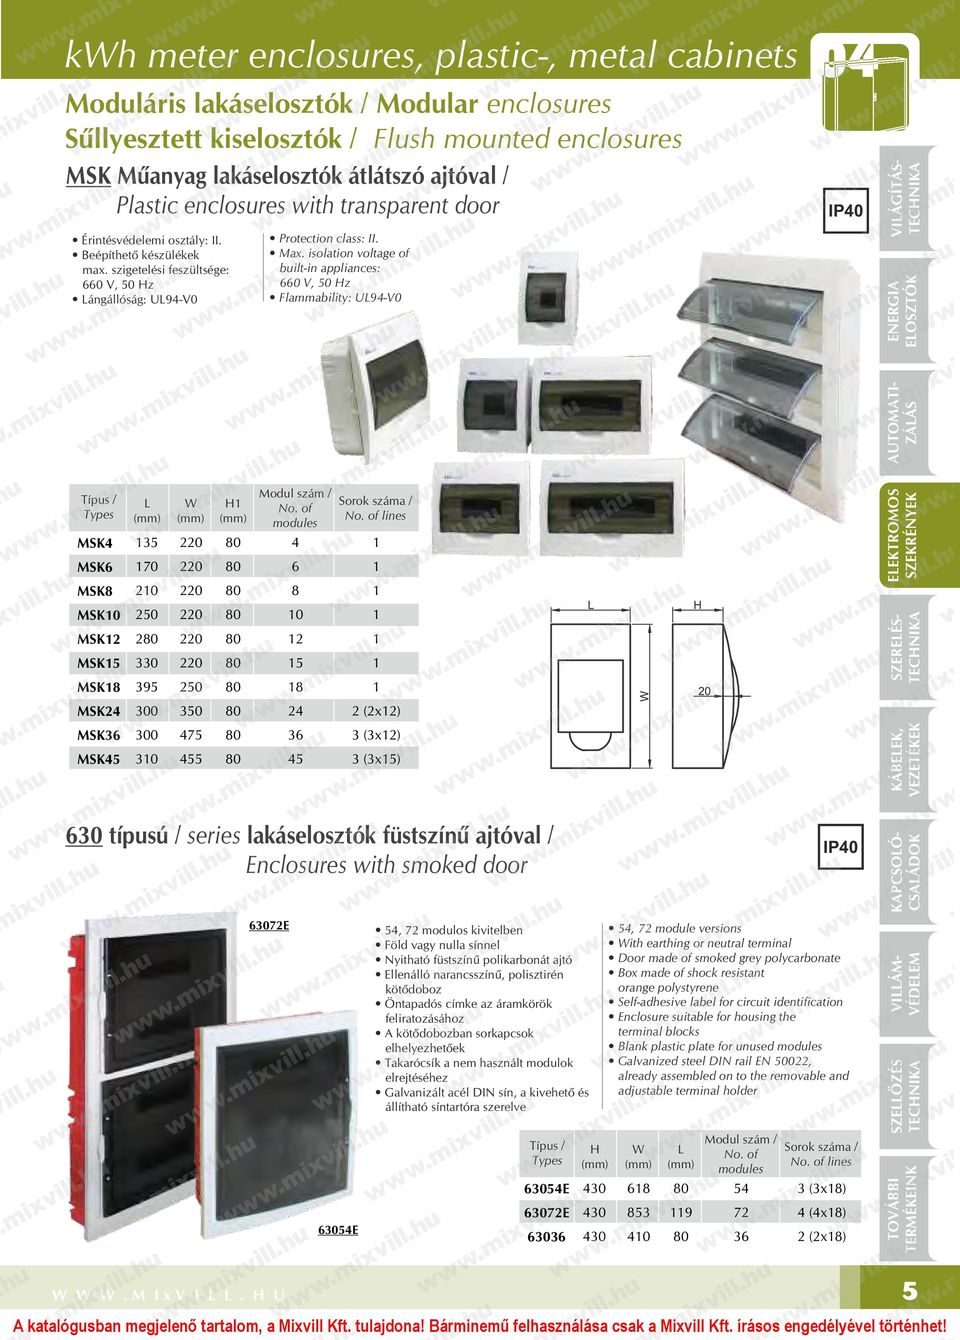 isolation voltage of builtin appliances: 660 V, 50 Hz Flammability: UL94V0 IP40 VILÁGÍTÁS Típus / Types MSK4 MSK6 MSK8 L 35 70 20 W 220 220 220 H 80 80 80 Modul szám / No.